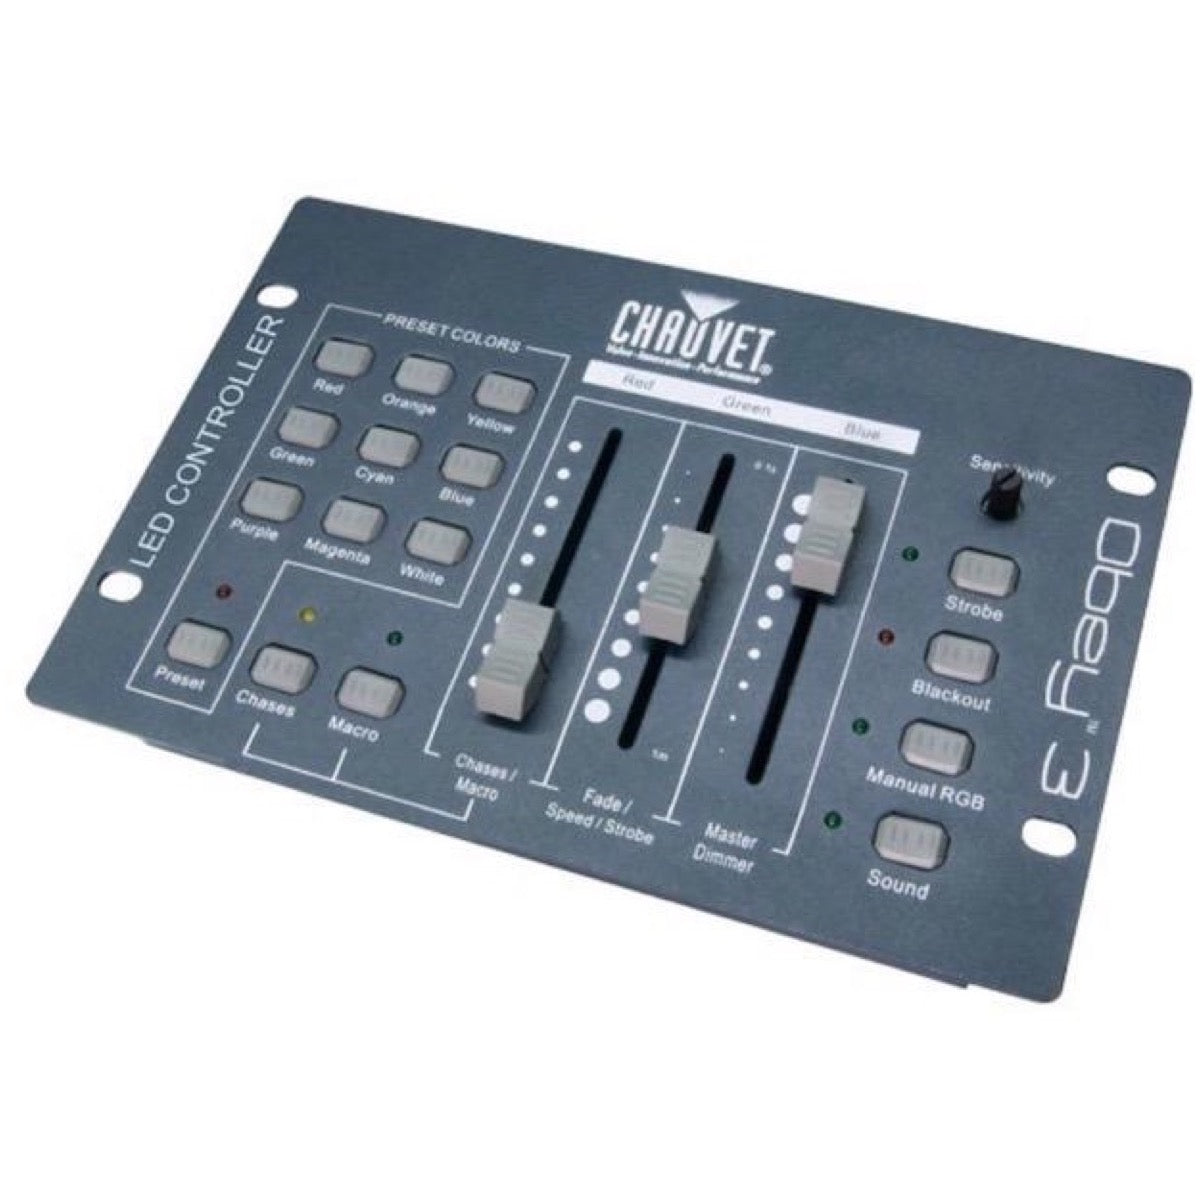 Chauvet DJ OBEY3 DMX Lighting Controller